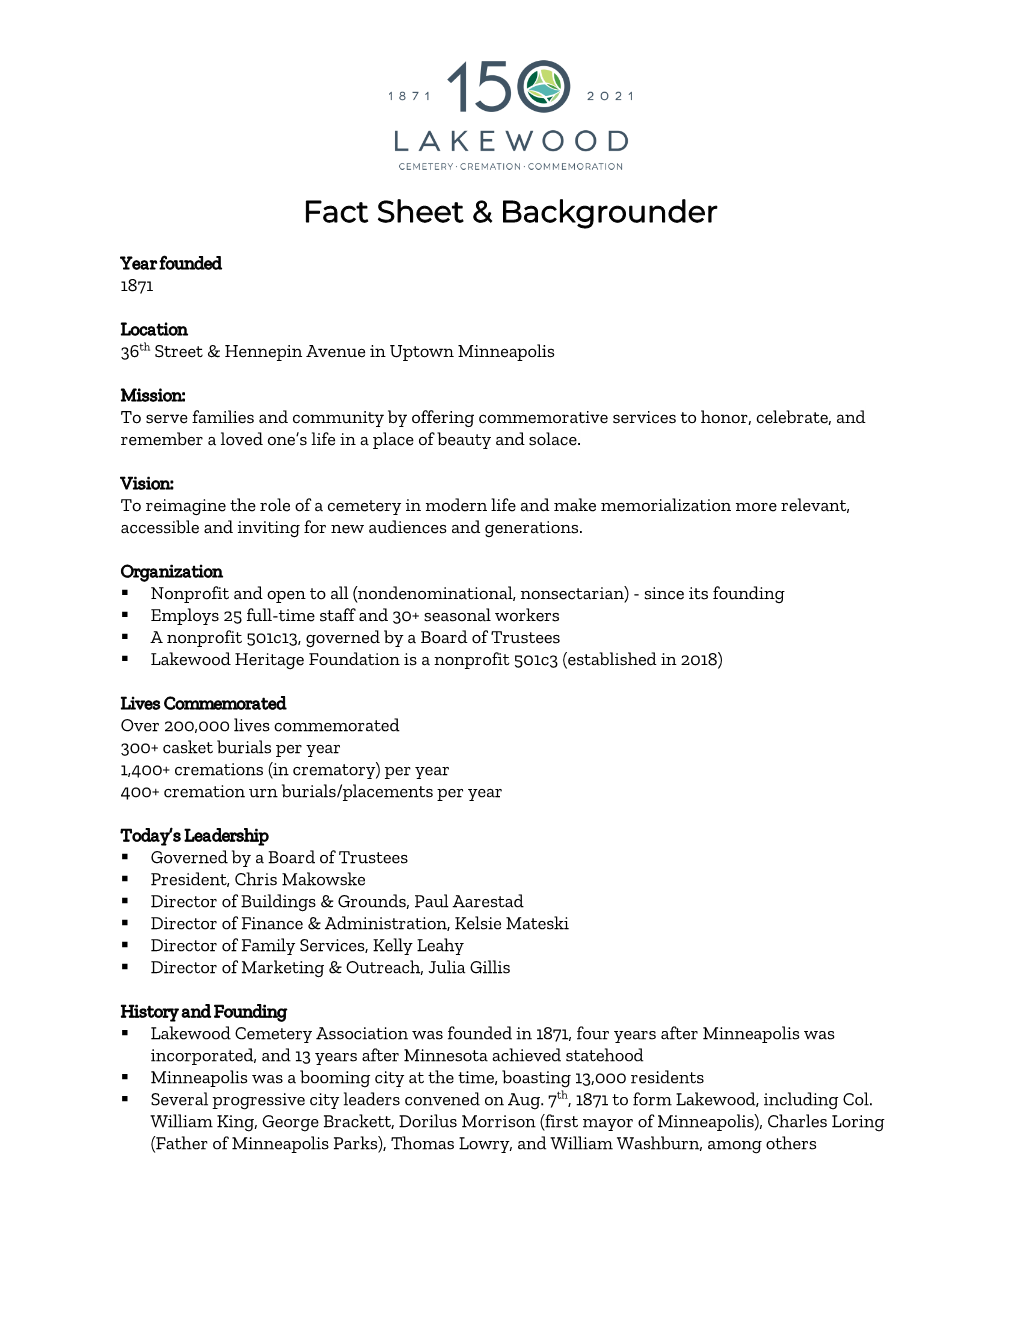 Lakewood Fact Sheet & Backgrounder